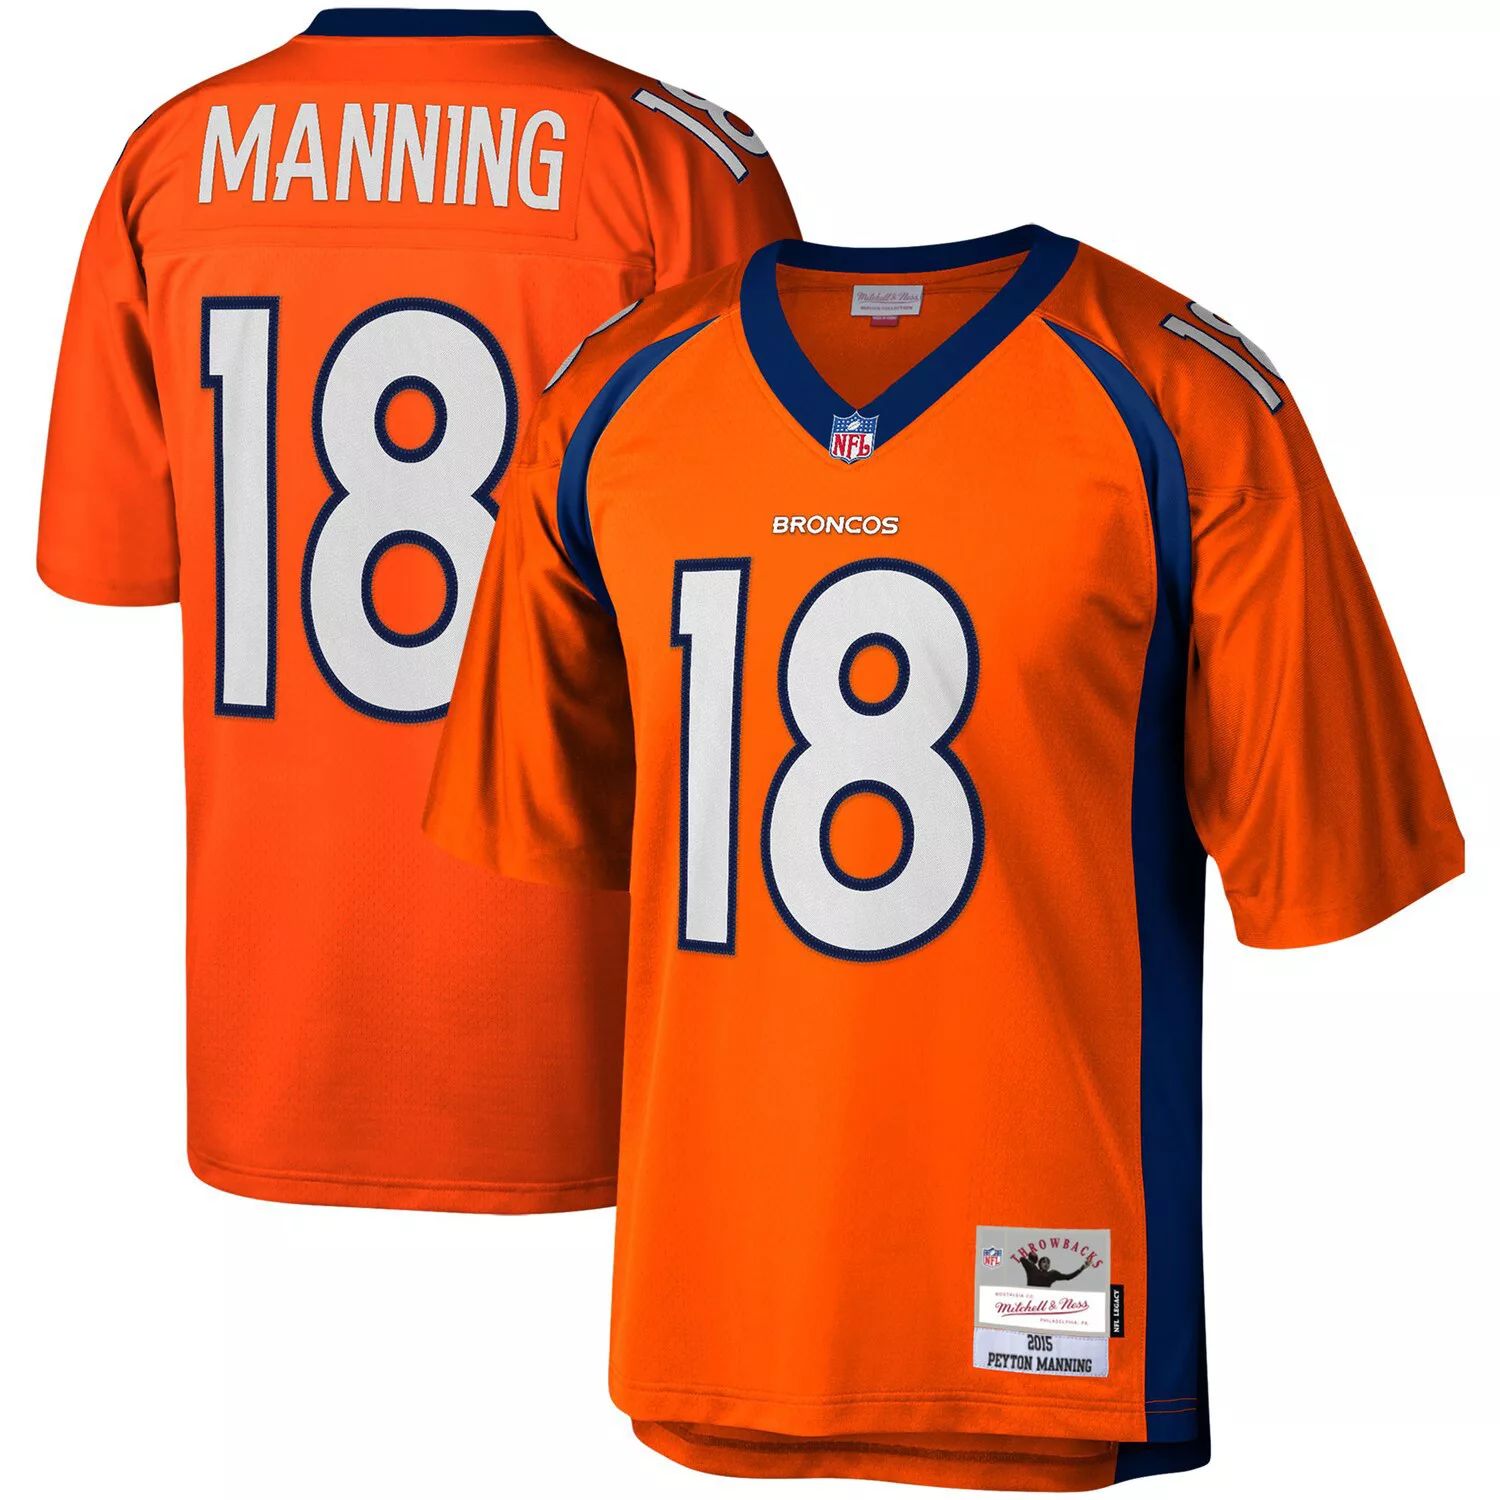 Мужская футболка Mitchell & Ness Peyton Manning Orange Denver Broncos 2015 Legacy Replica Джерси мужская футболка peyton manning navy orange denver broncos 2015 split legacy копия джерси mitchell